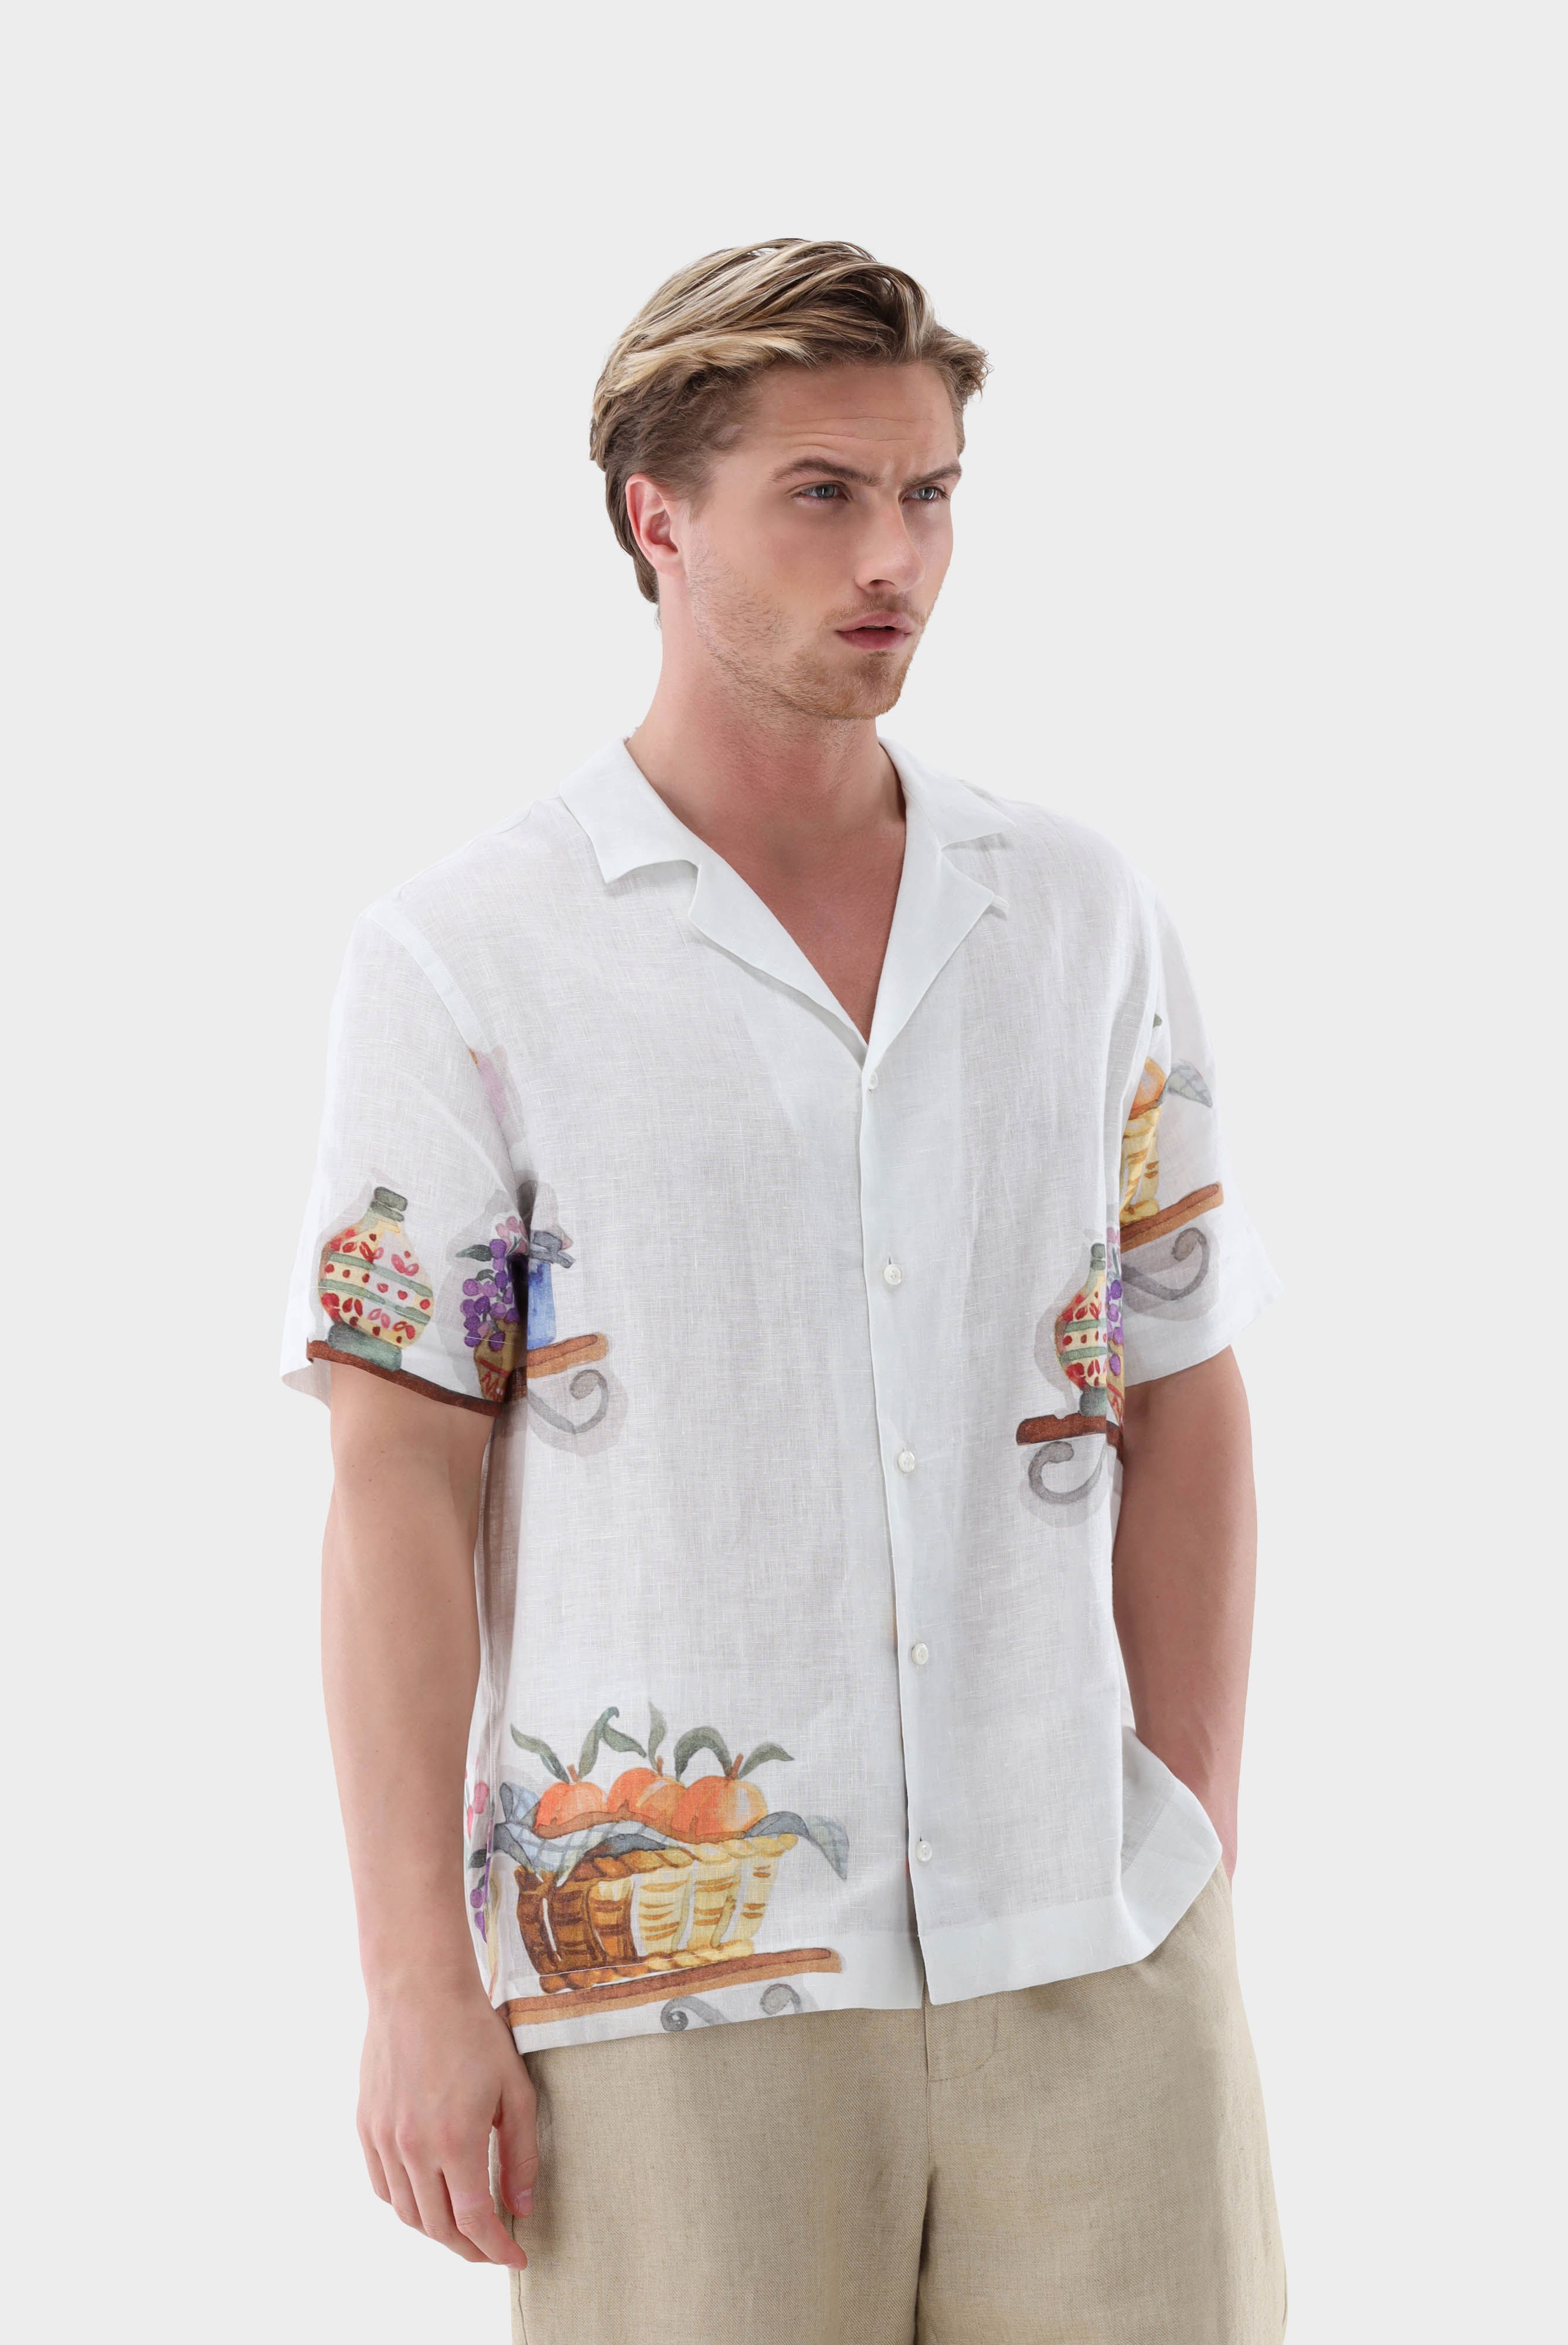 Bowling shirt with art print